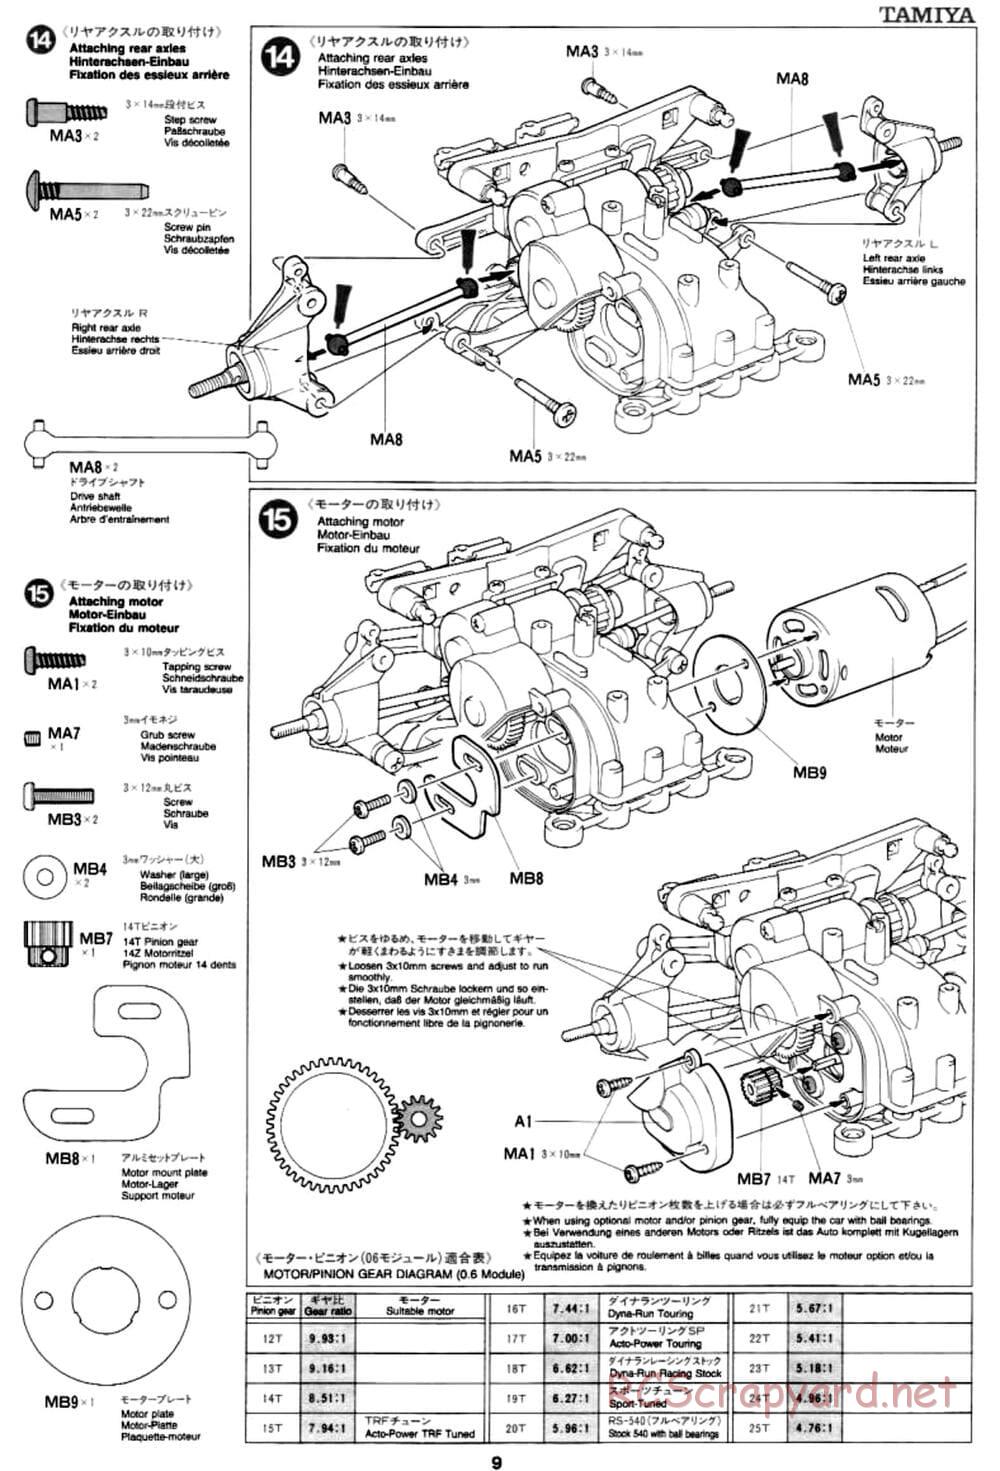 Tamiya - Mercedes CLK-GTR - TA-03R Chassis - Manual - Page 9